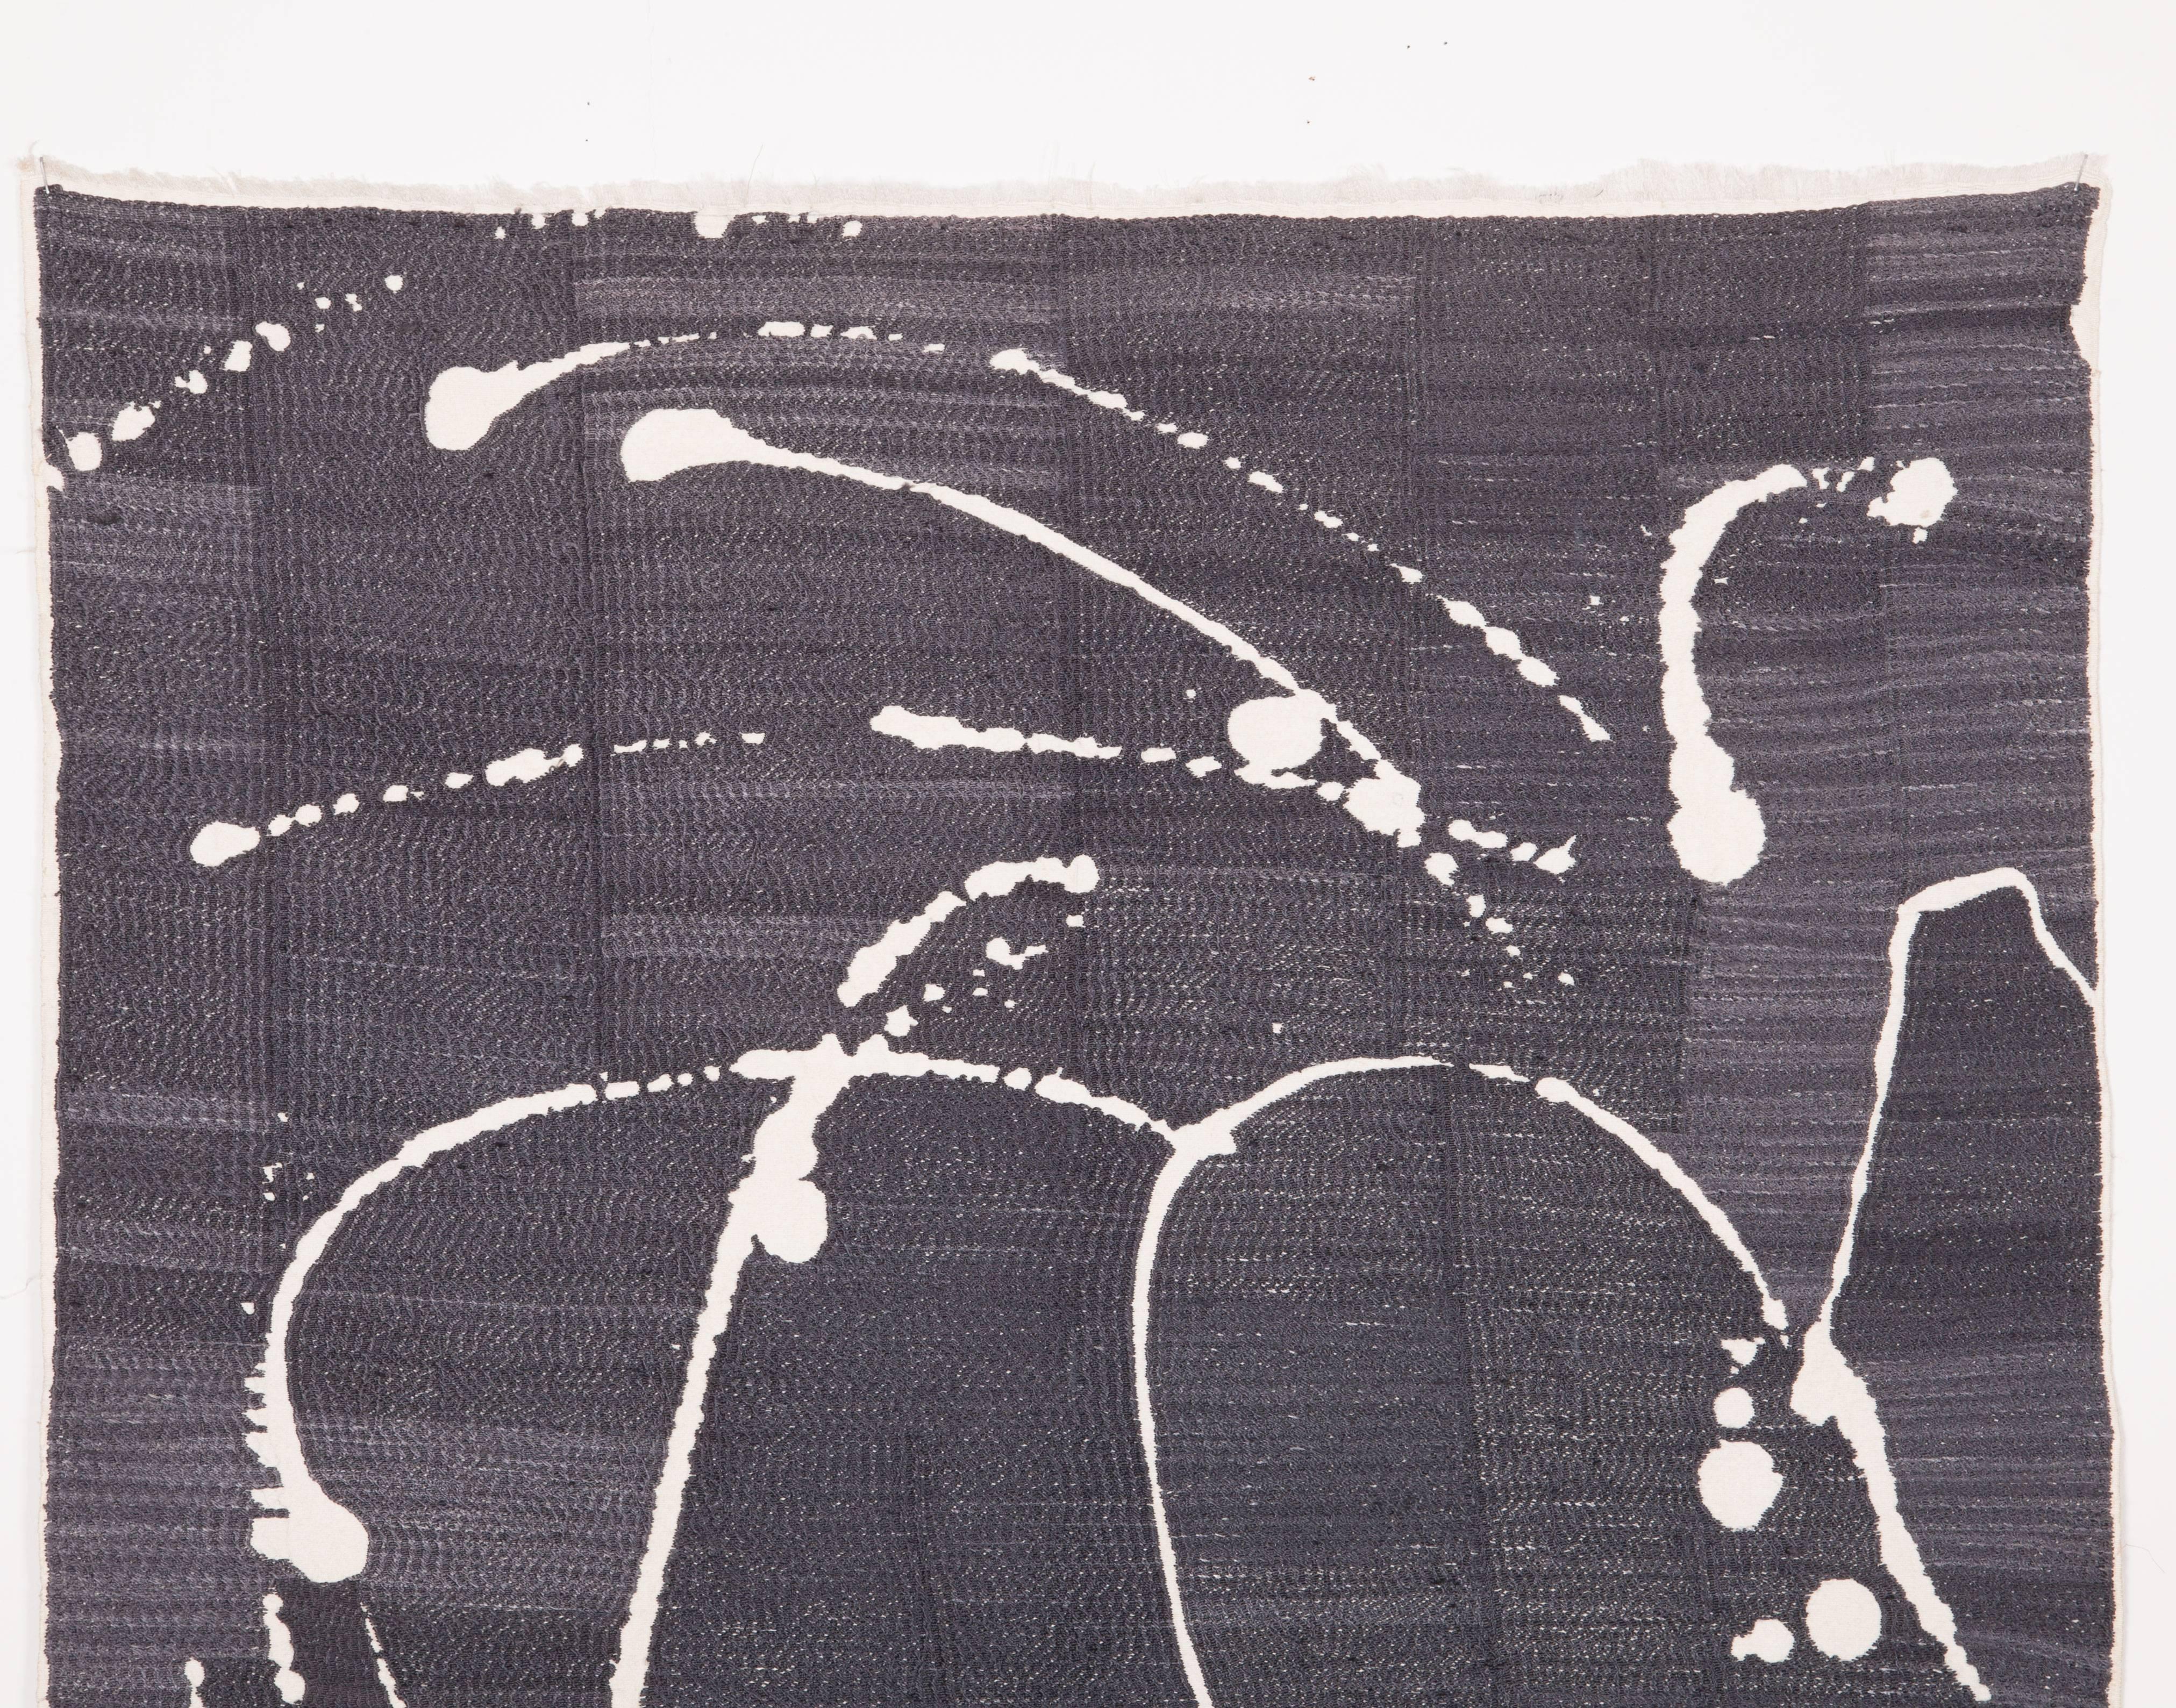 Silk embroidery on silk canvas, 2007. 

Mike Berg.
CV.
(b. 1956 Portland, Oregon USA).
Lives and works in Istanbul, Turkey and New York, NY.
Education.
1971 BA University of Washington, Seattle 1972 BFA, Fort Wright College, Spokane,